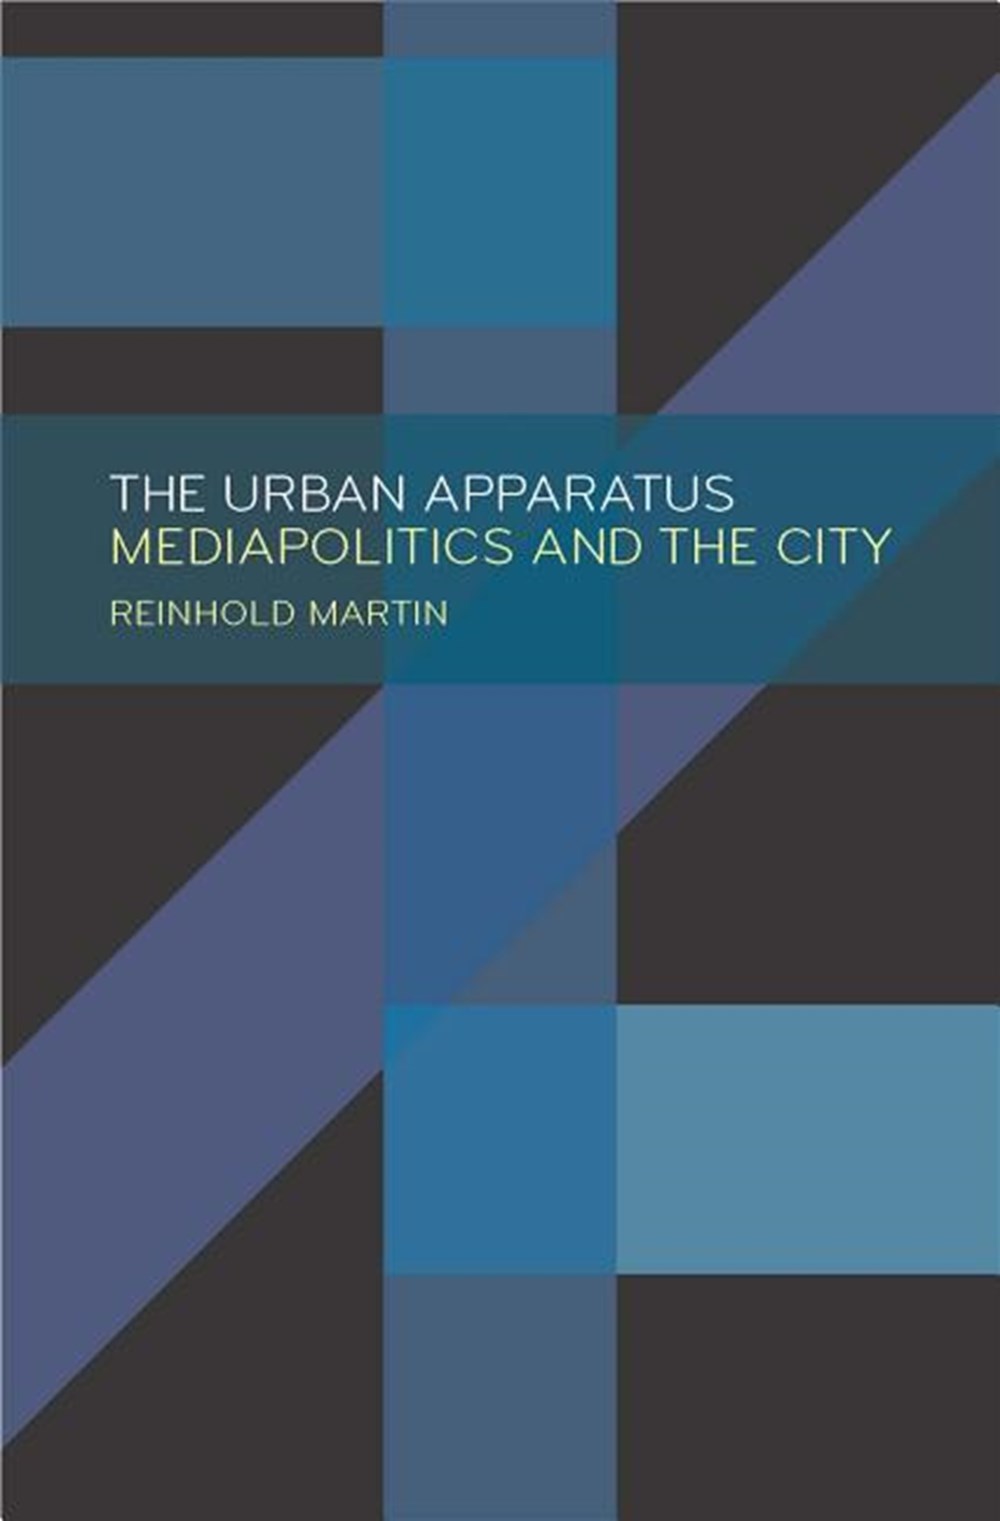 Urban Apparatus: Mediapolitics and the City